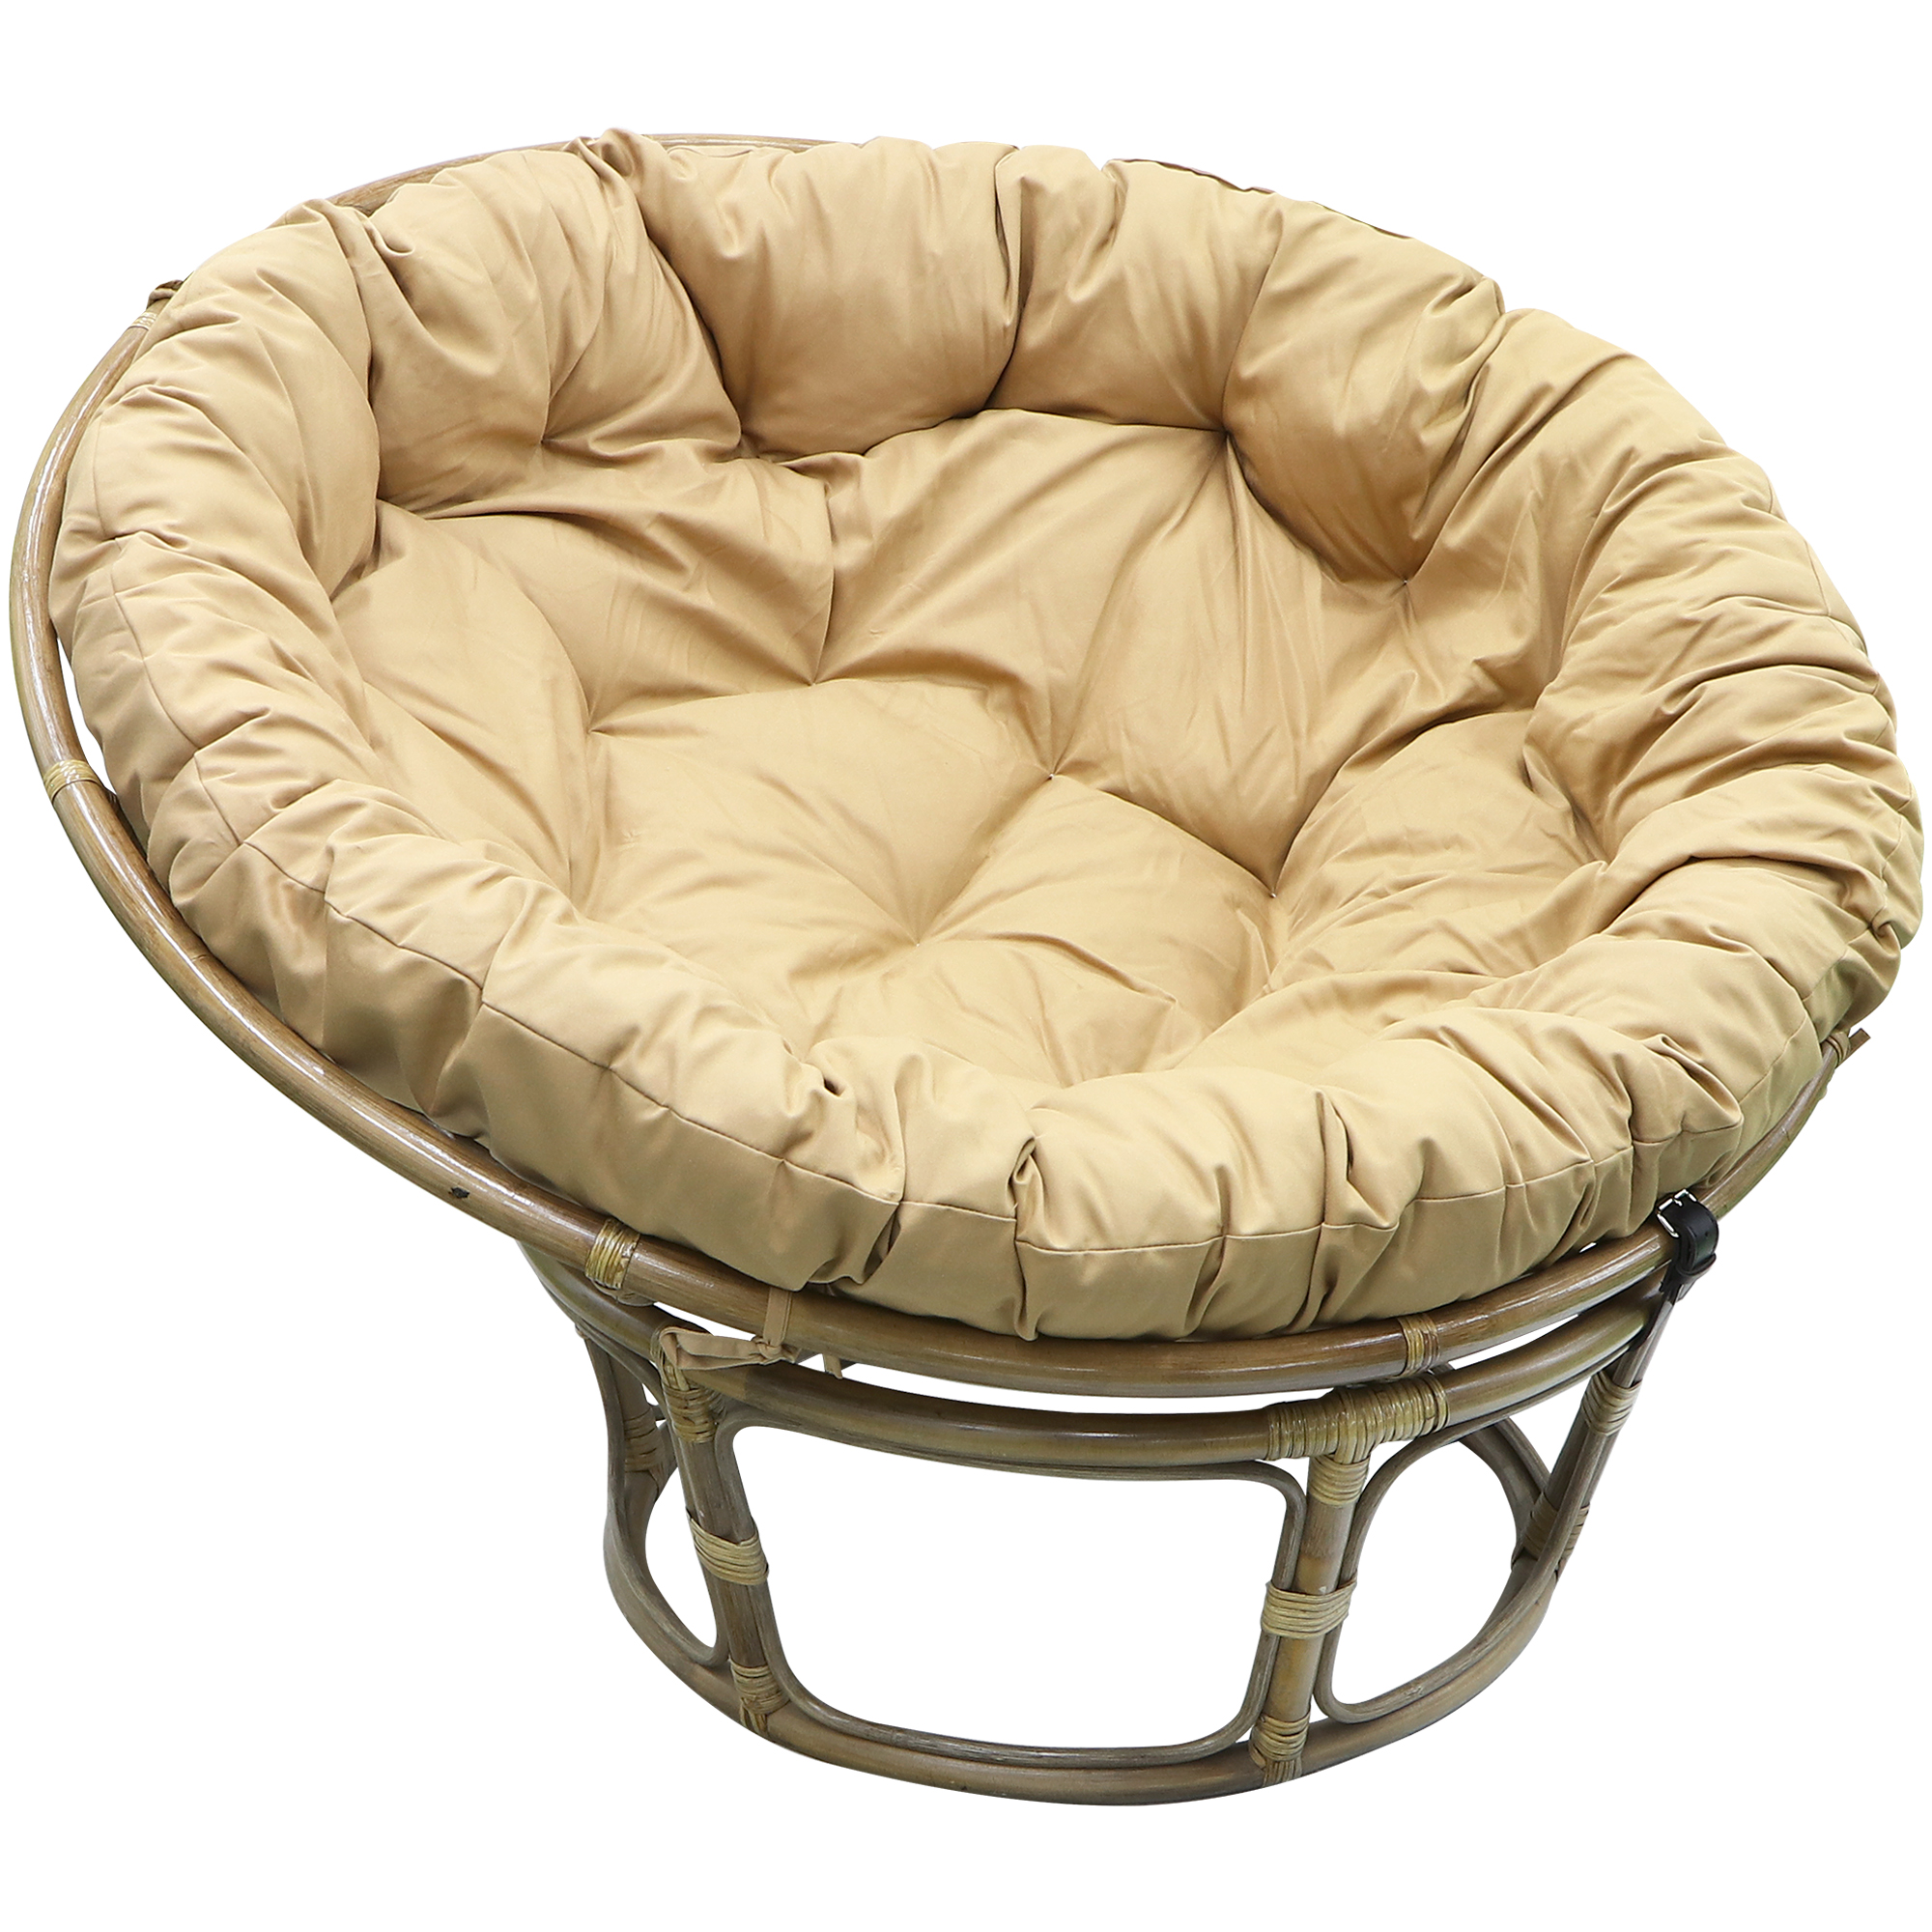 Кресло-папасан Rattan grand brown с подушкой бежевое кресло качалка rattan grand medium brown